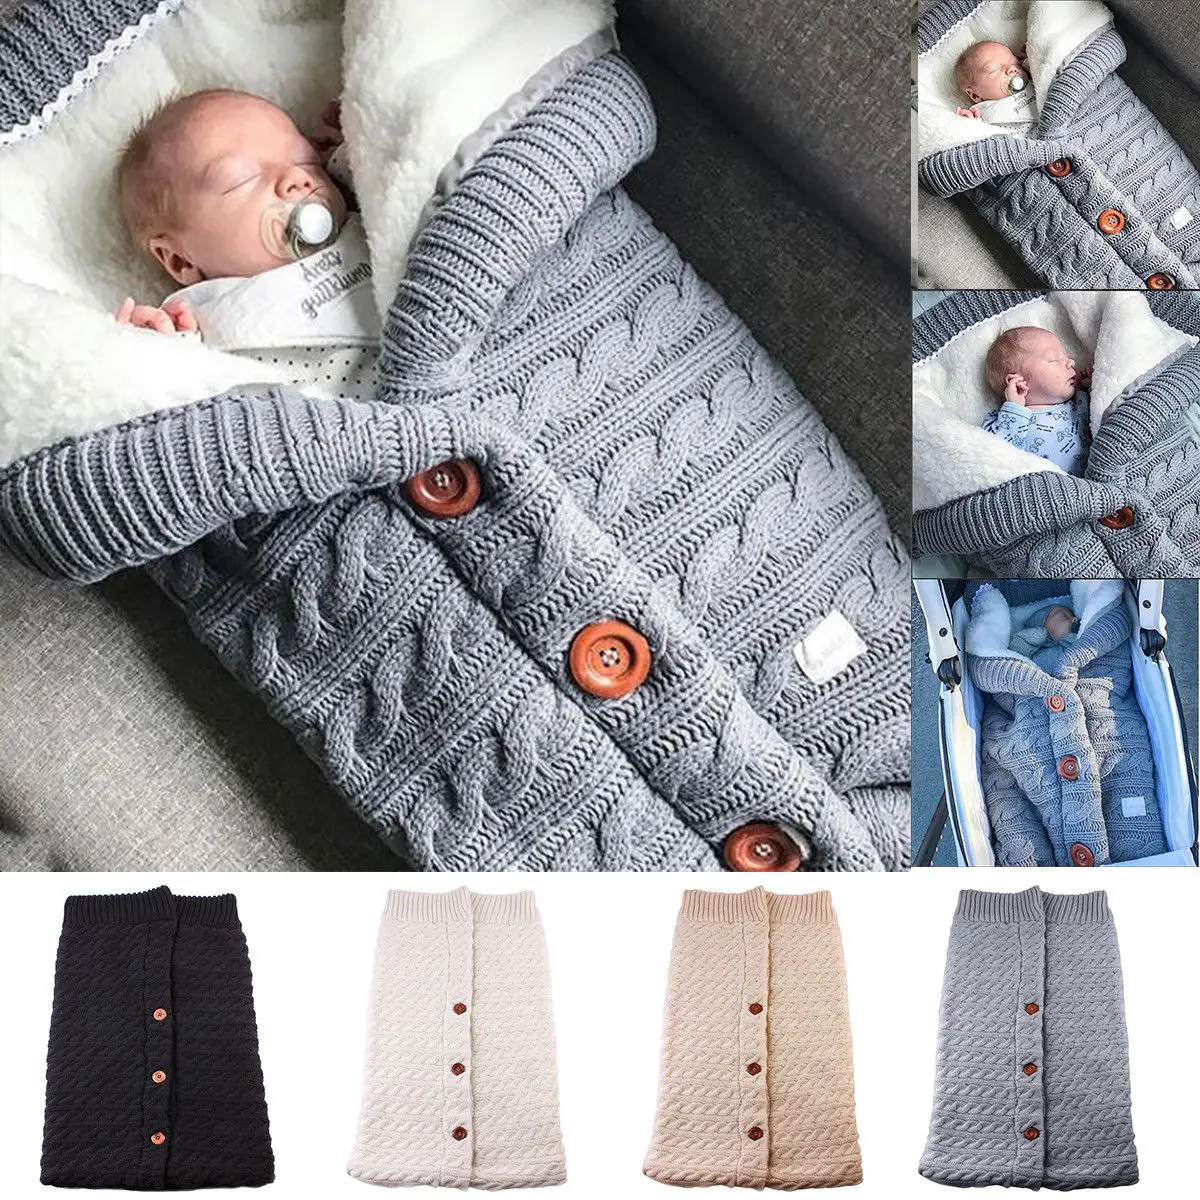 Baby Hooded Swaddle Knit Wrap Decke warme Kinderwagen Kinderwagen Schlafsack 01 